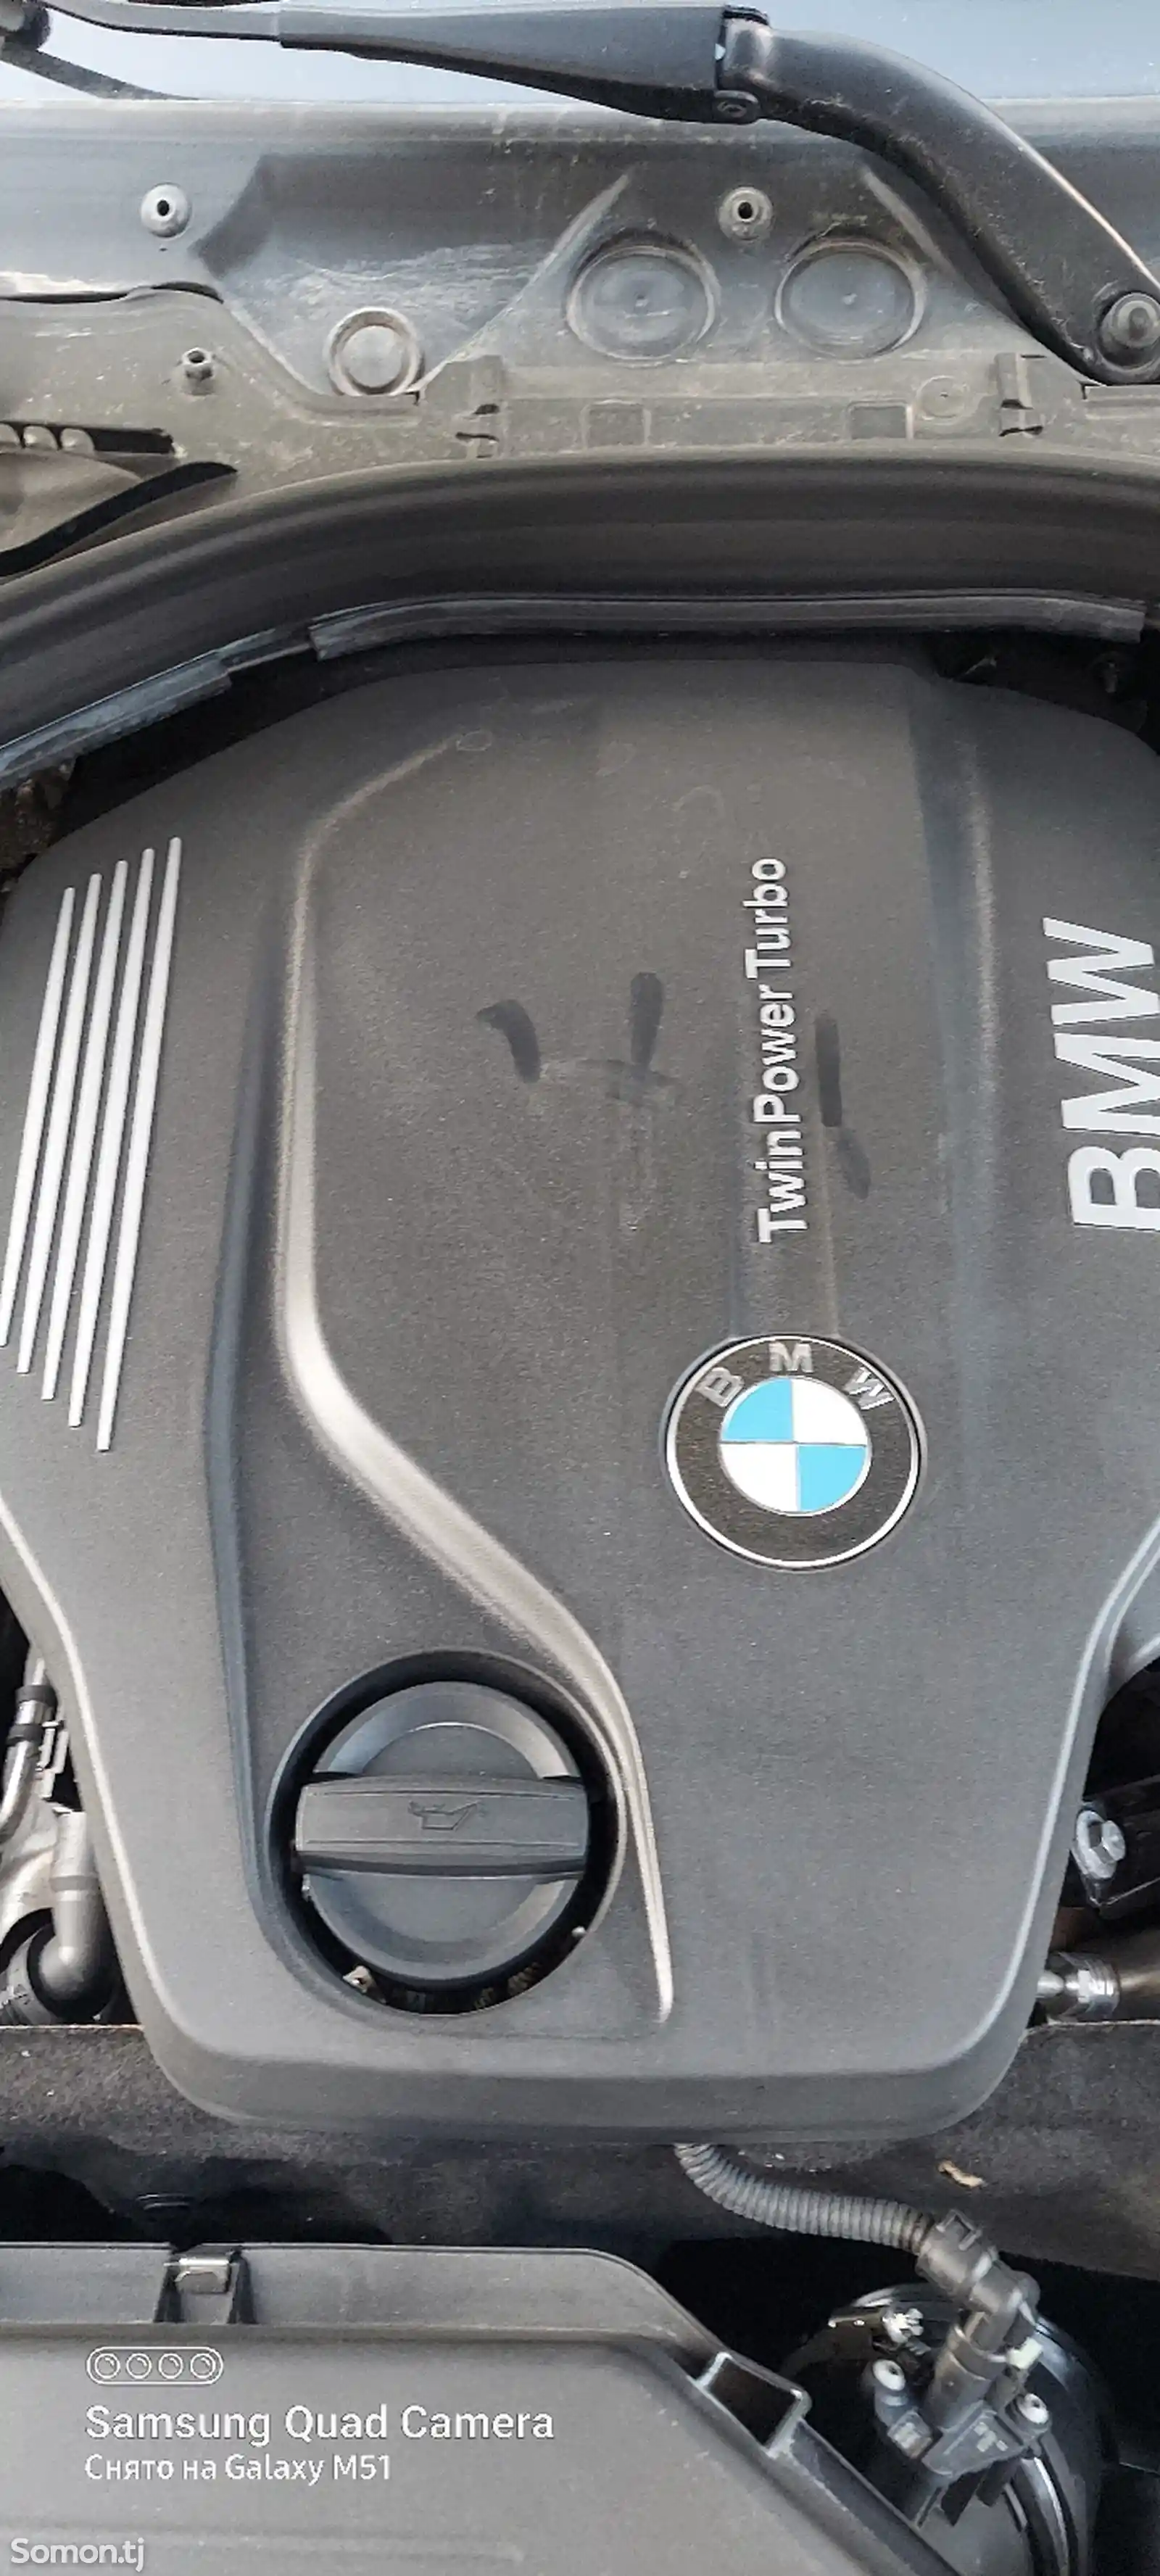 BMW 4 series, 2017-2